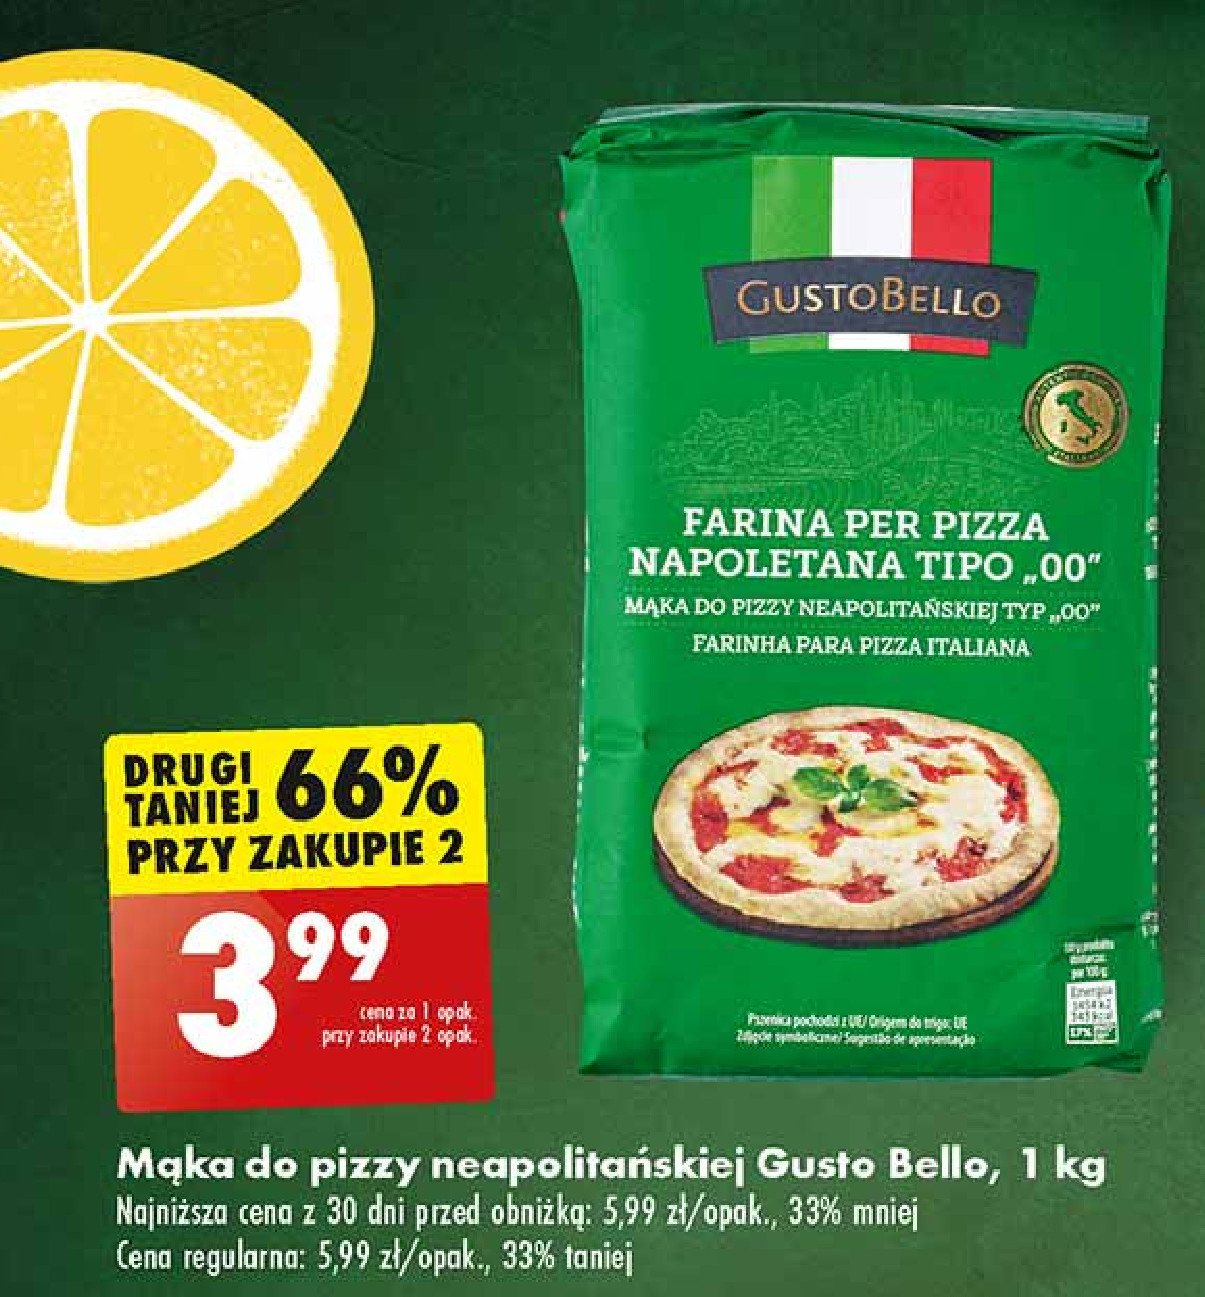 Mąka do pizzy neapolitańskiej Gustobello promocja